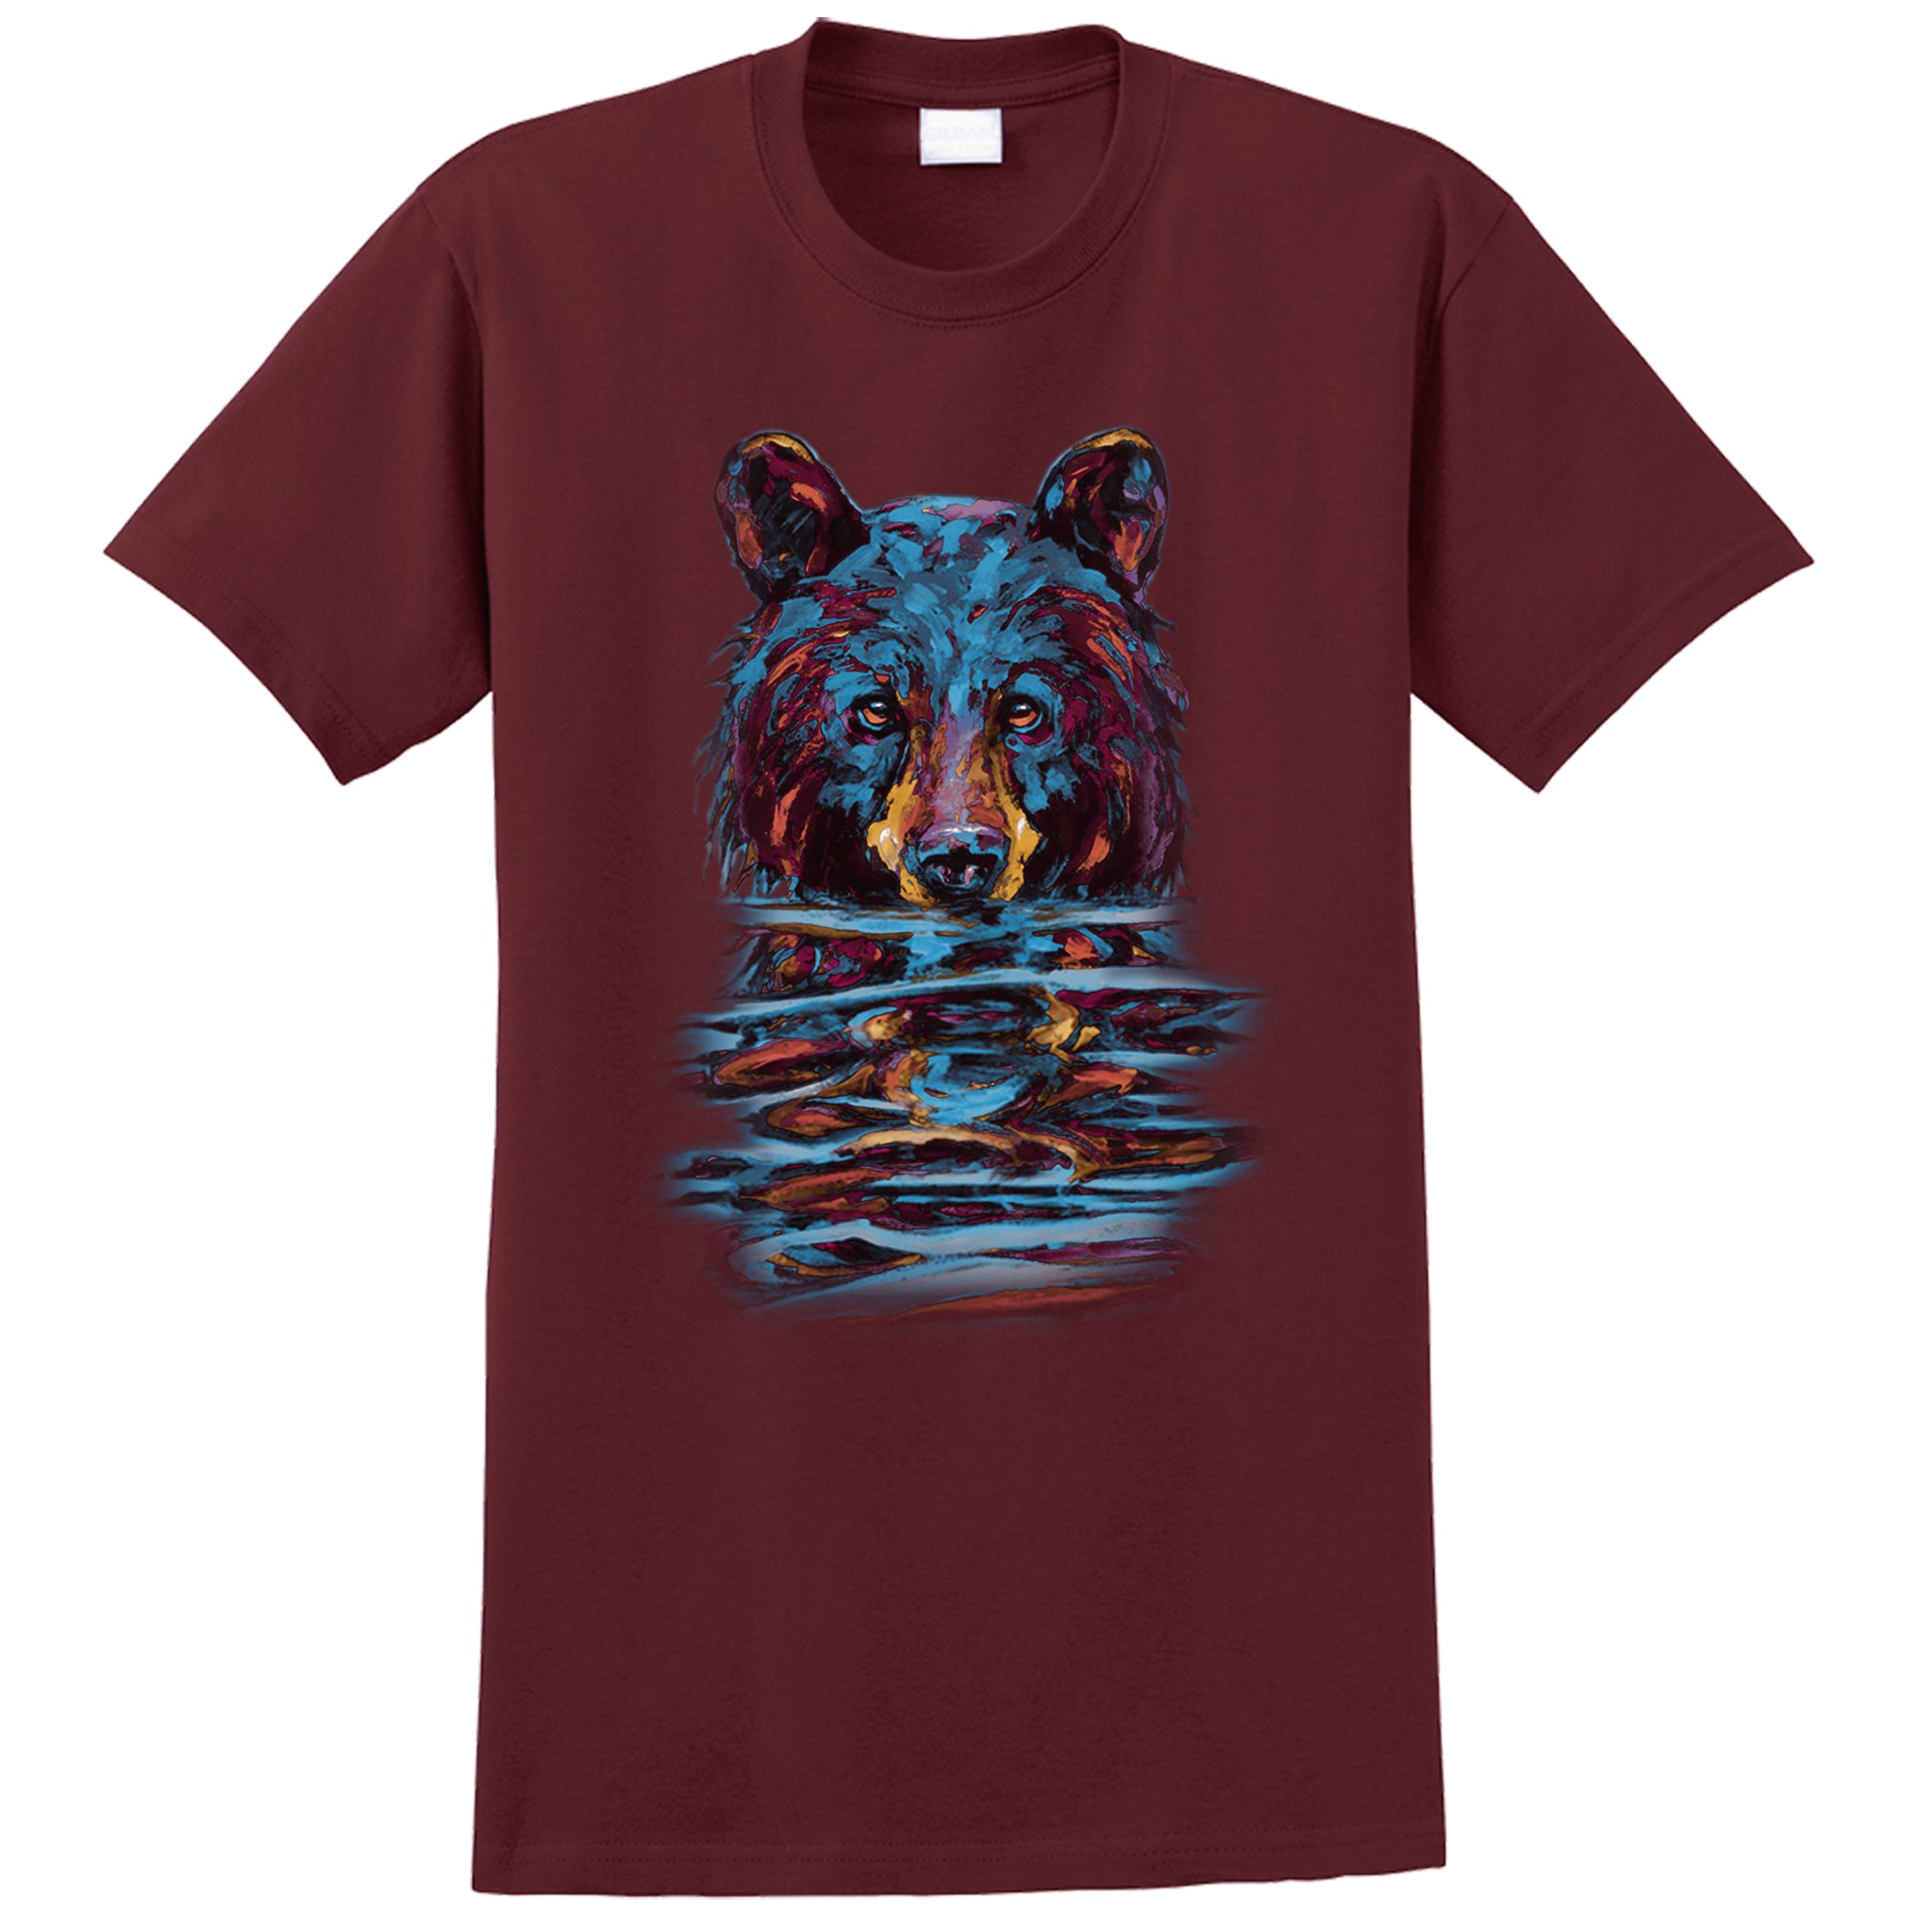 Very Wet Bear T-shirt - maroon T-shirt with black bear art by Canadian nature artist Kari Lehr